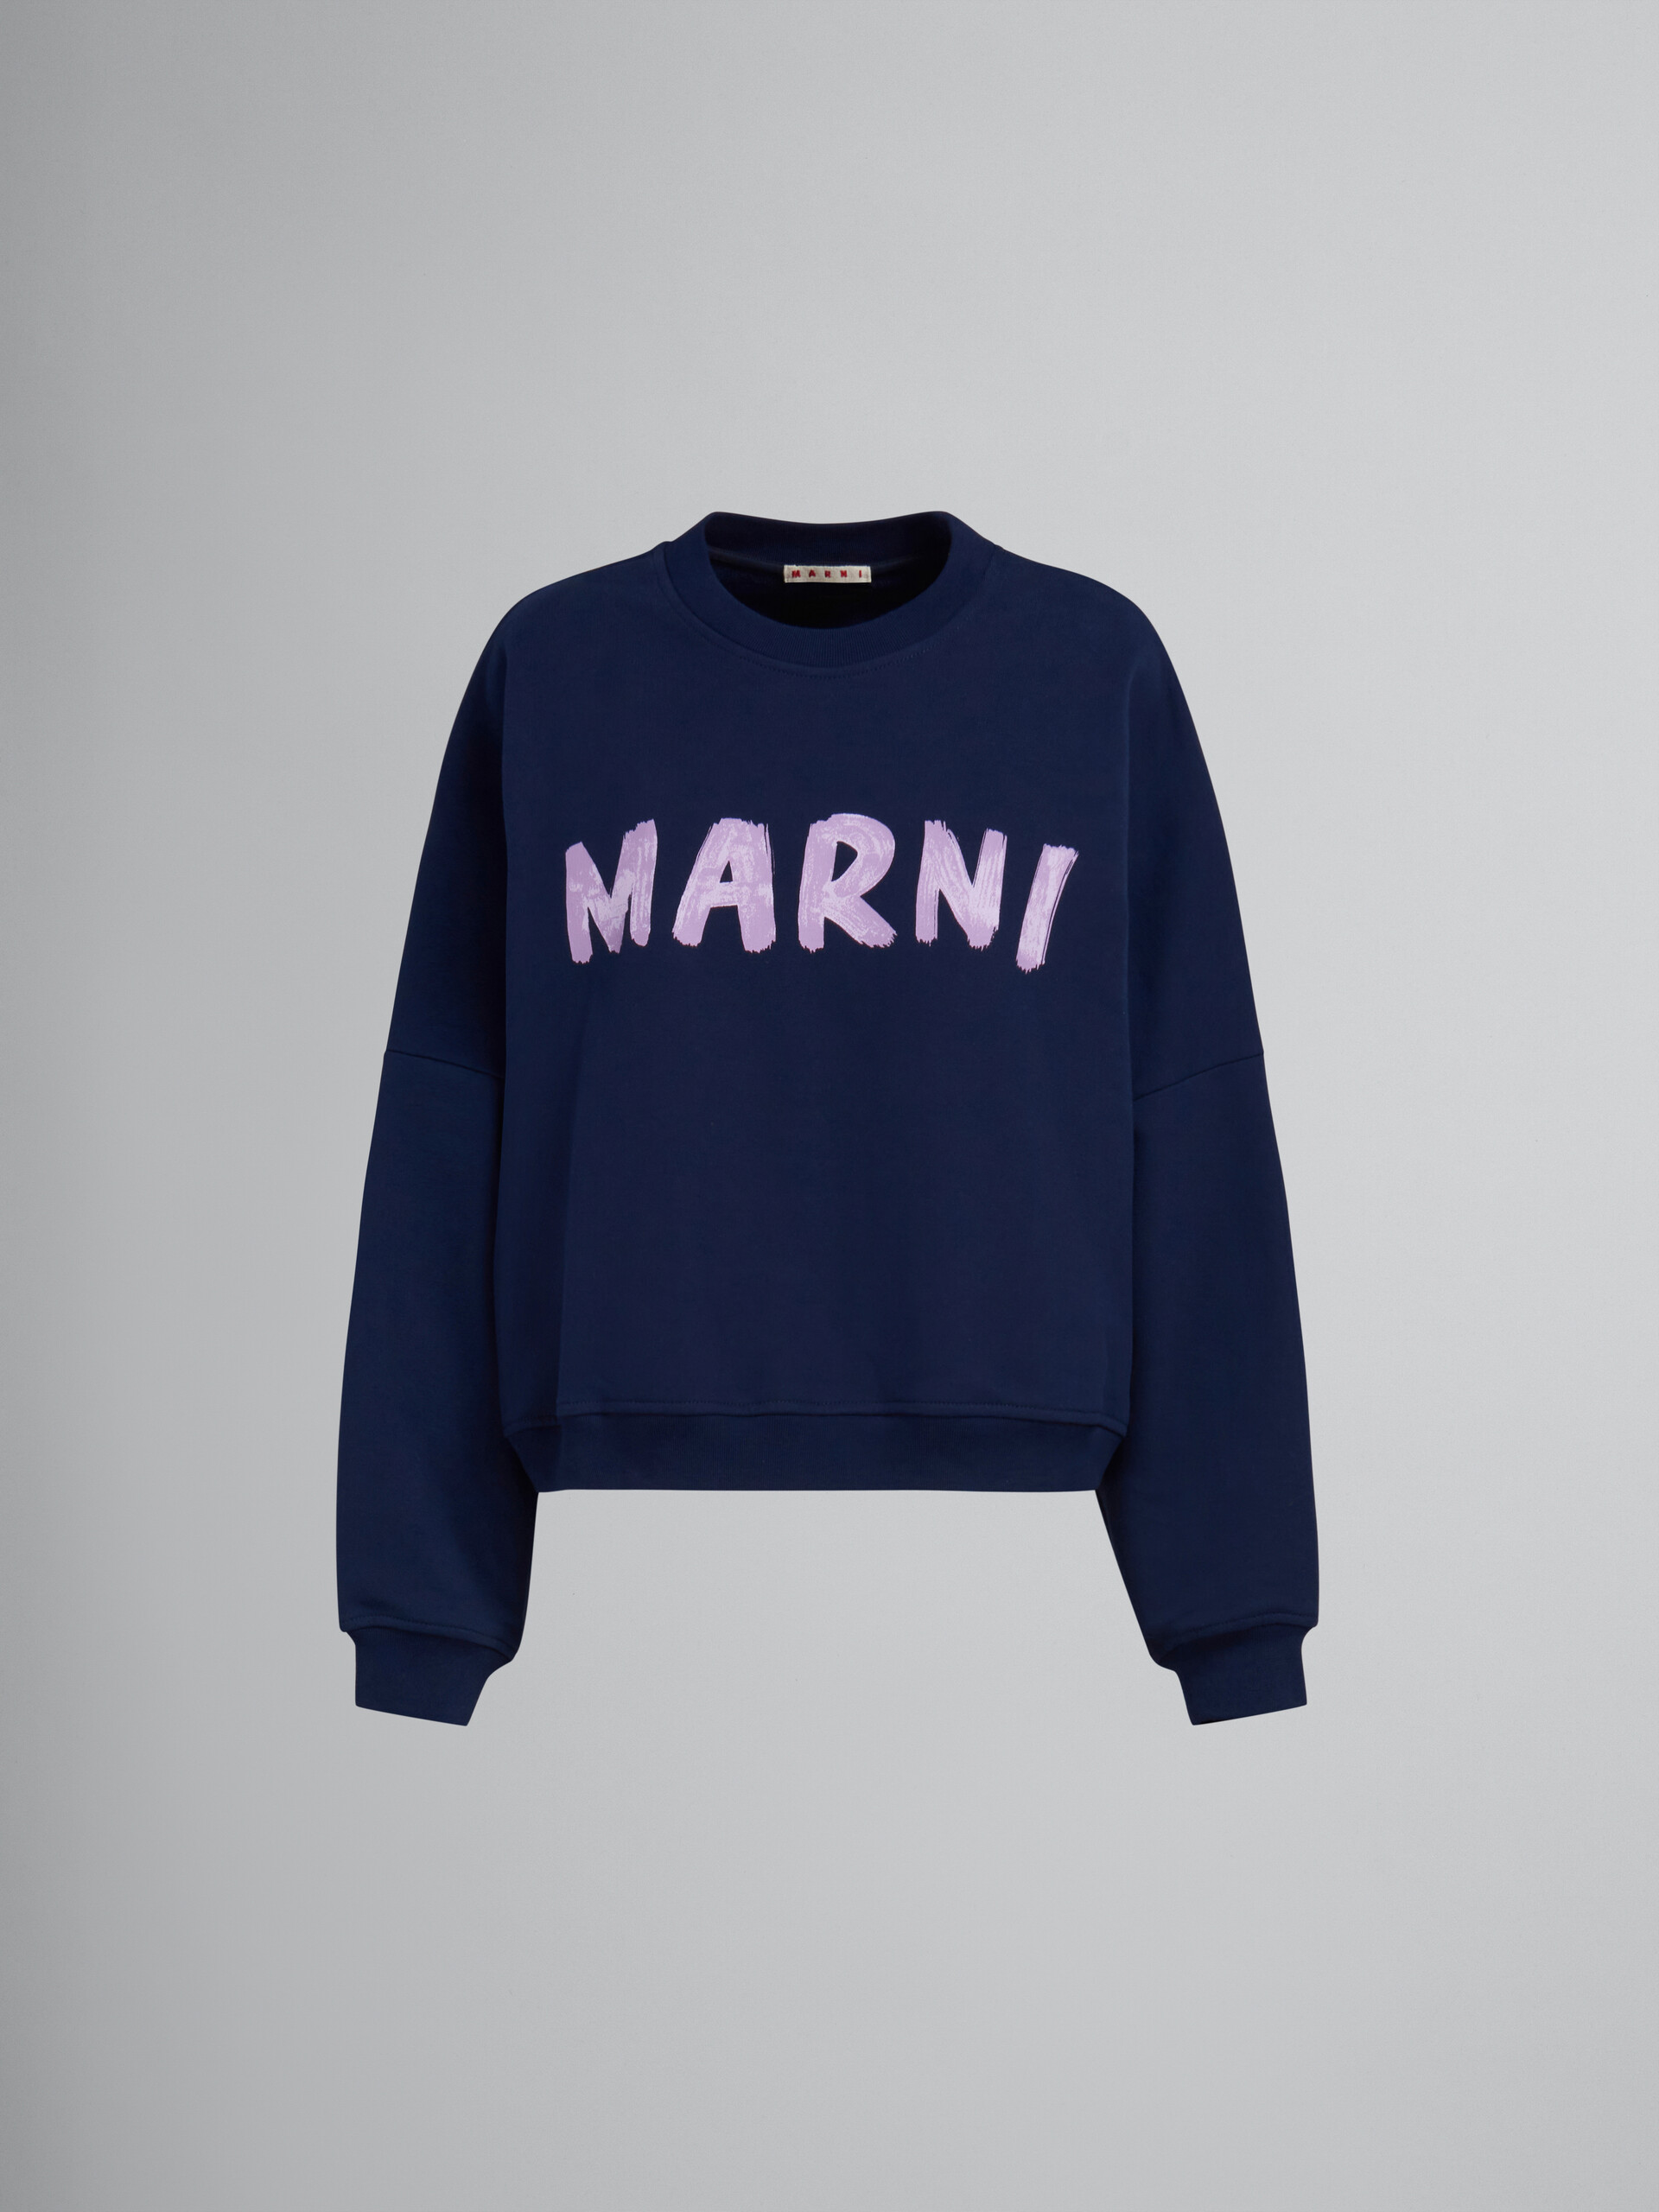 Blue organic cotton sweatshirt with Marni print - Pullovers - Image 1